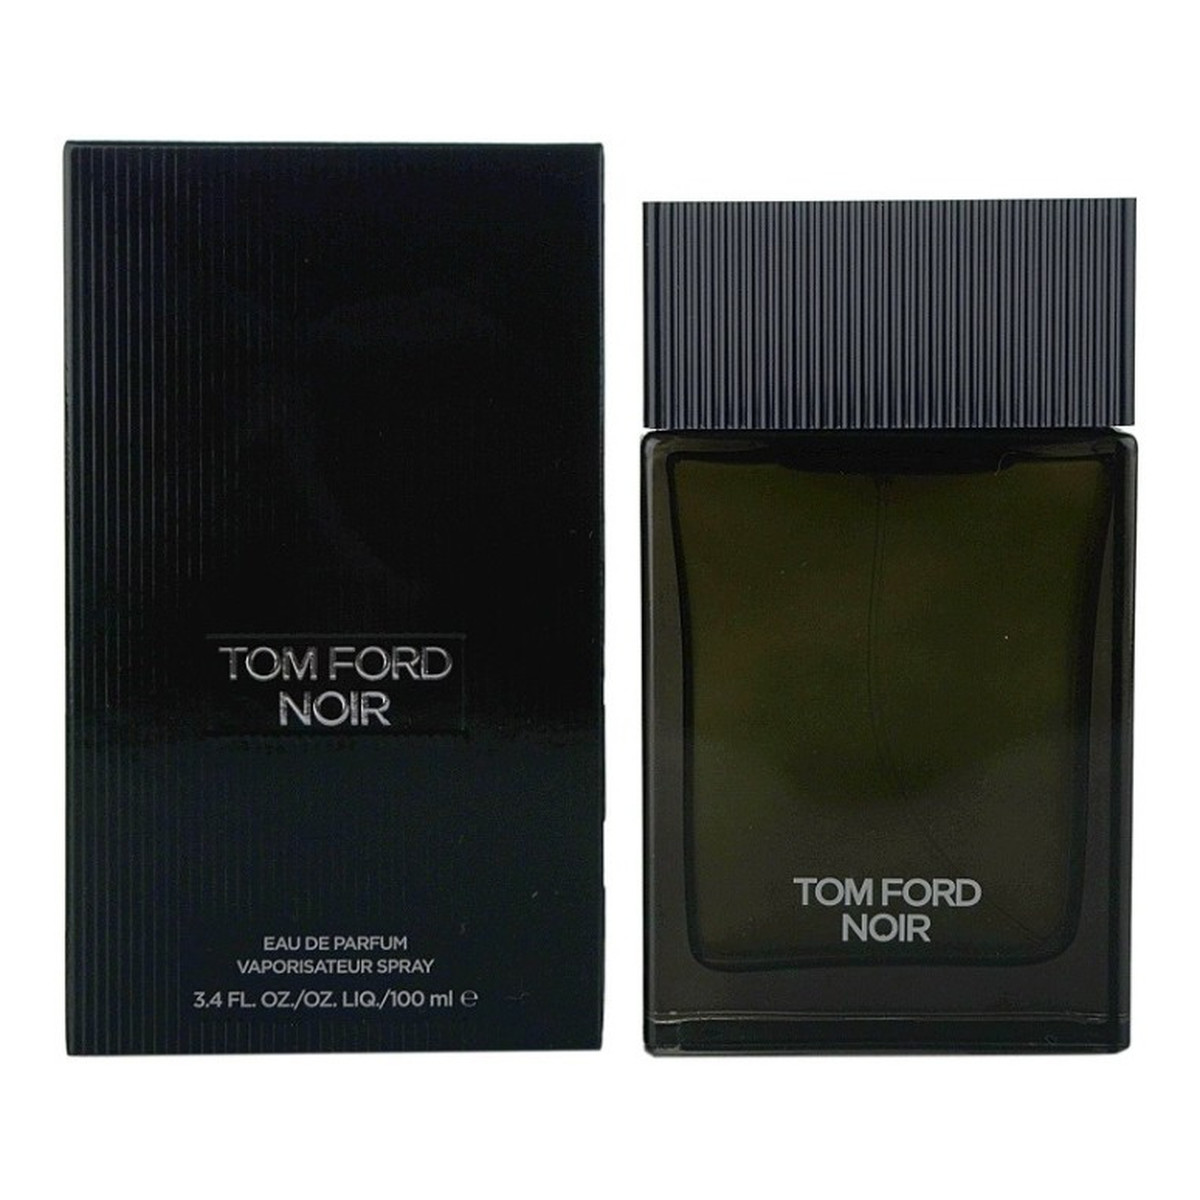 Tom Ford Noir woda perfumowana 100ml